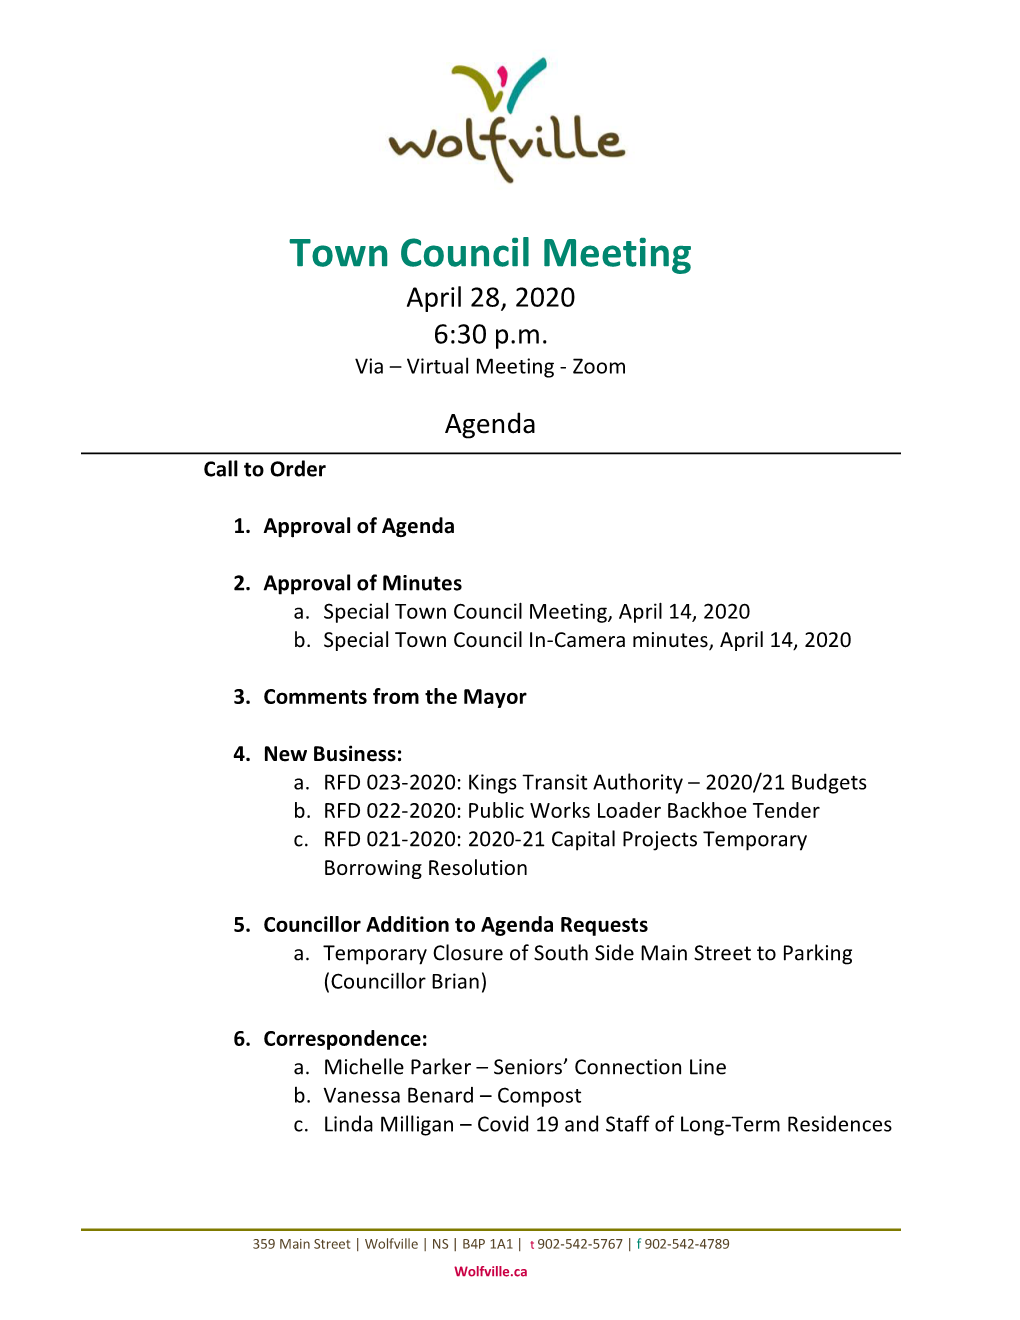 Town Council Meeting April 28, 2020 6:30 P.M